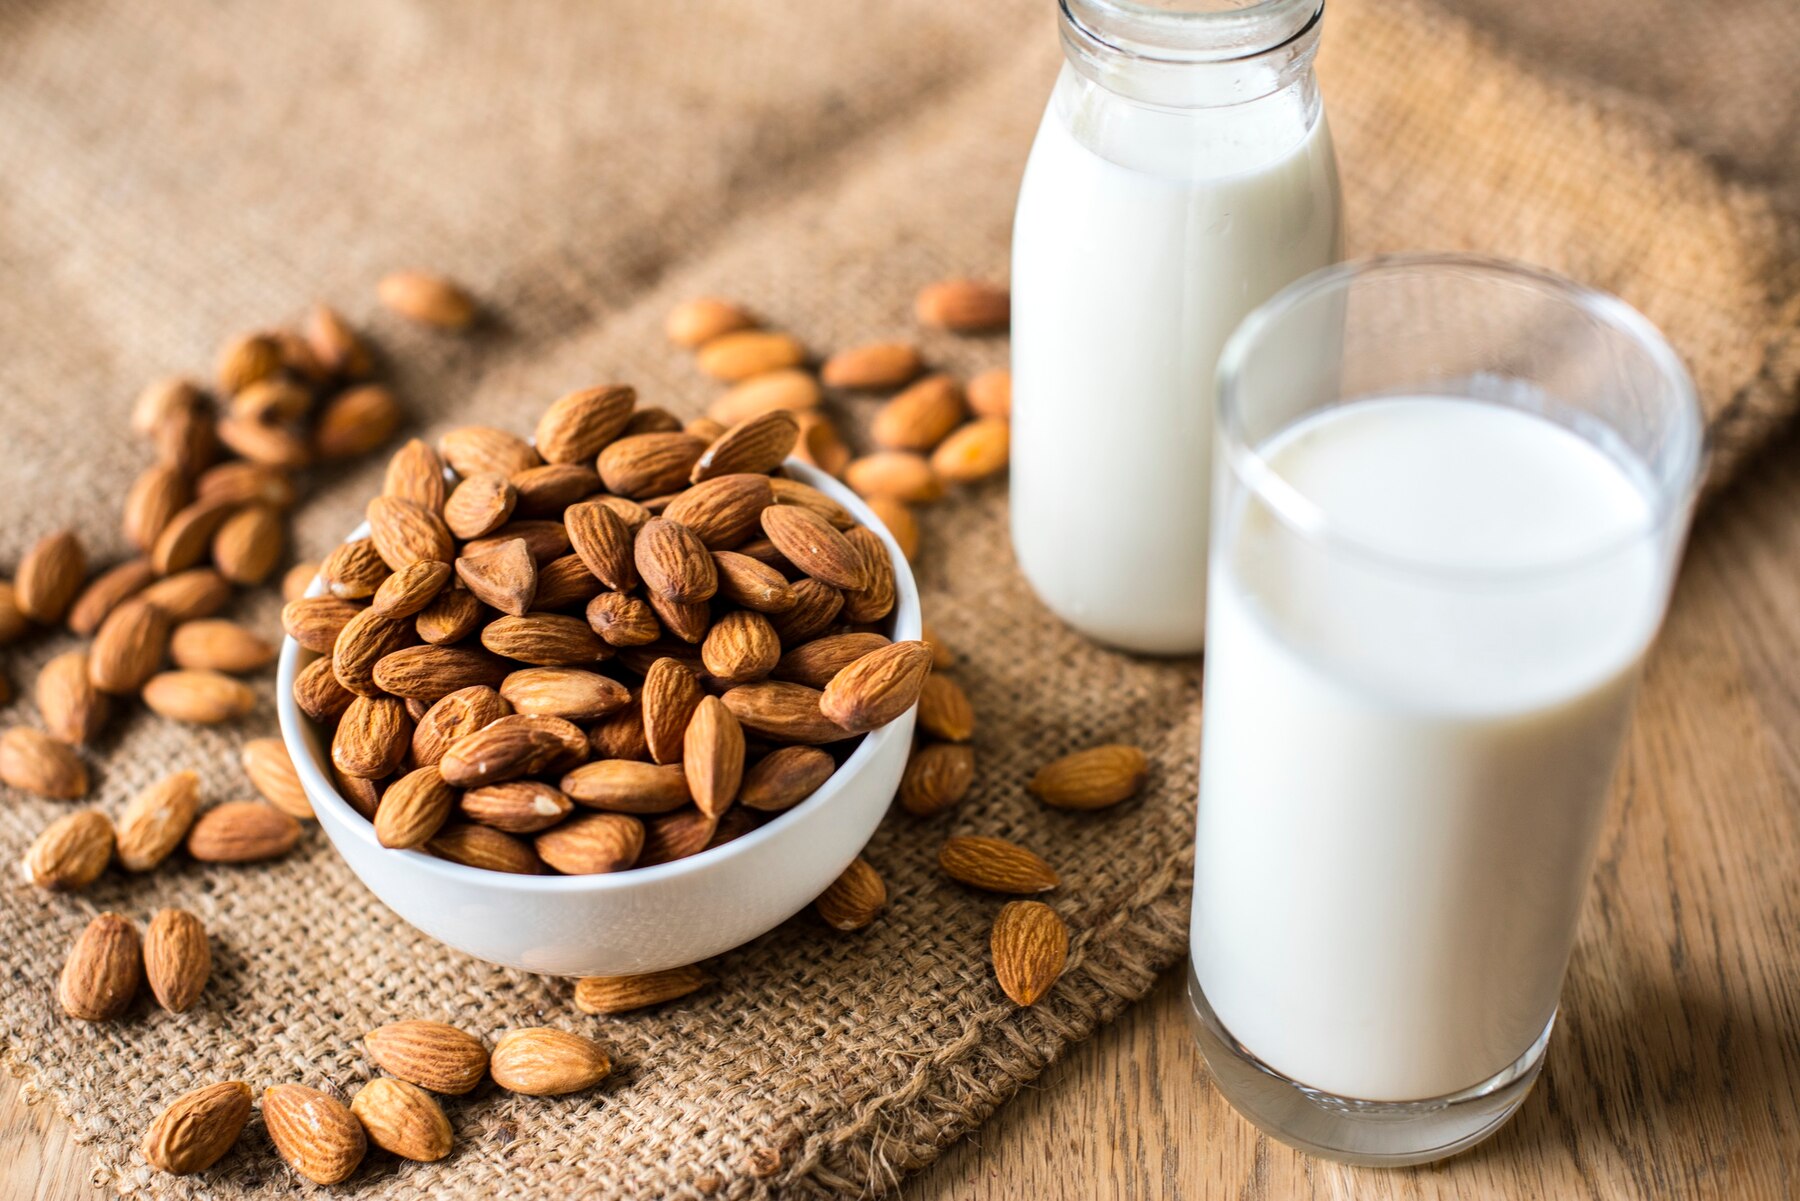 organic-almond-milk-and-almonds_53876-18256.jpg